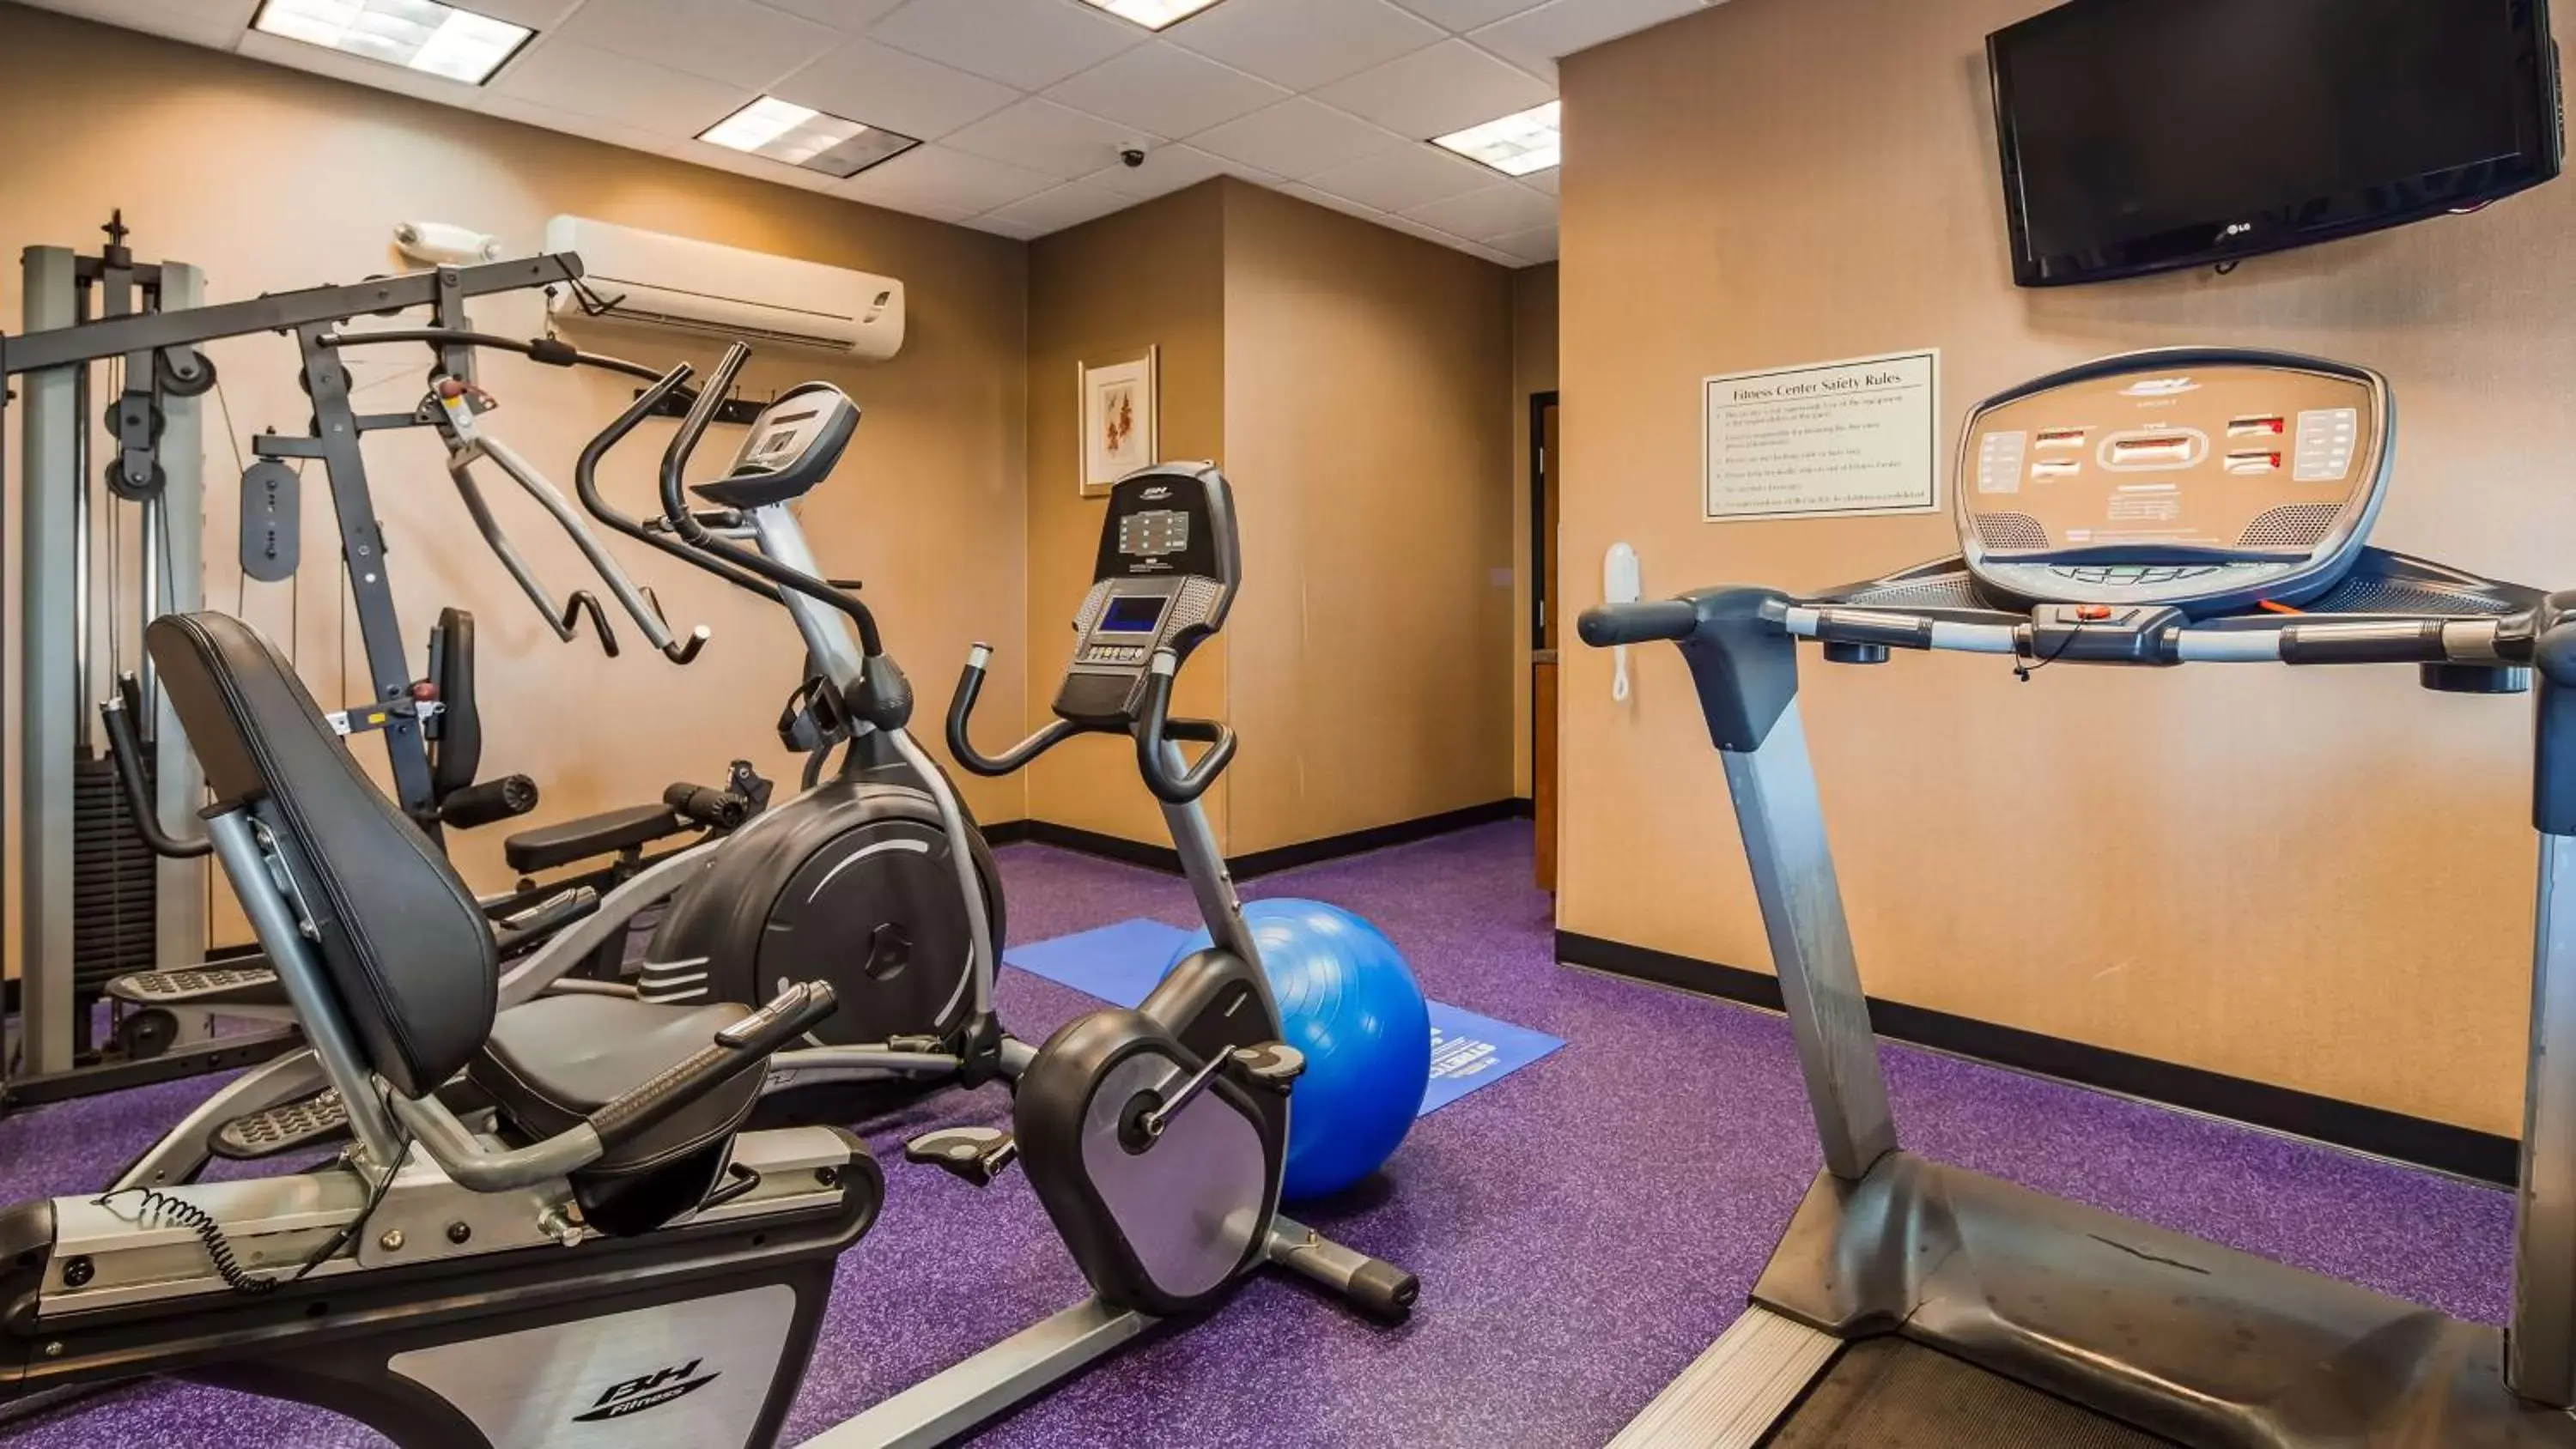 Fitness centre/facilities, Fitness Center/Facilities in Best Western Plus Carousel Inn & Suites Burlington